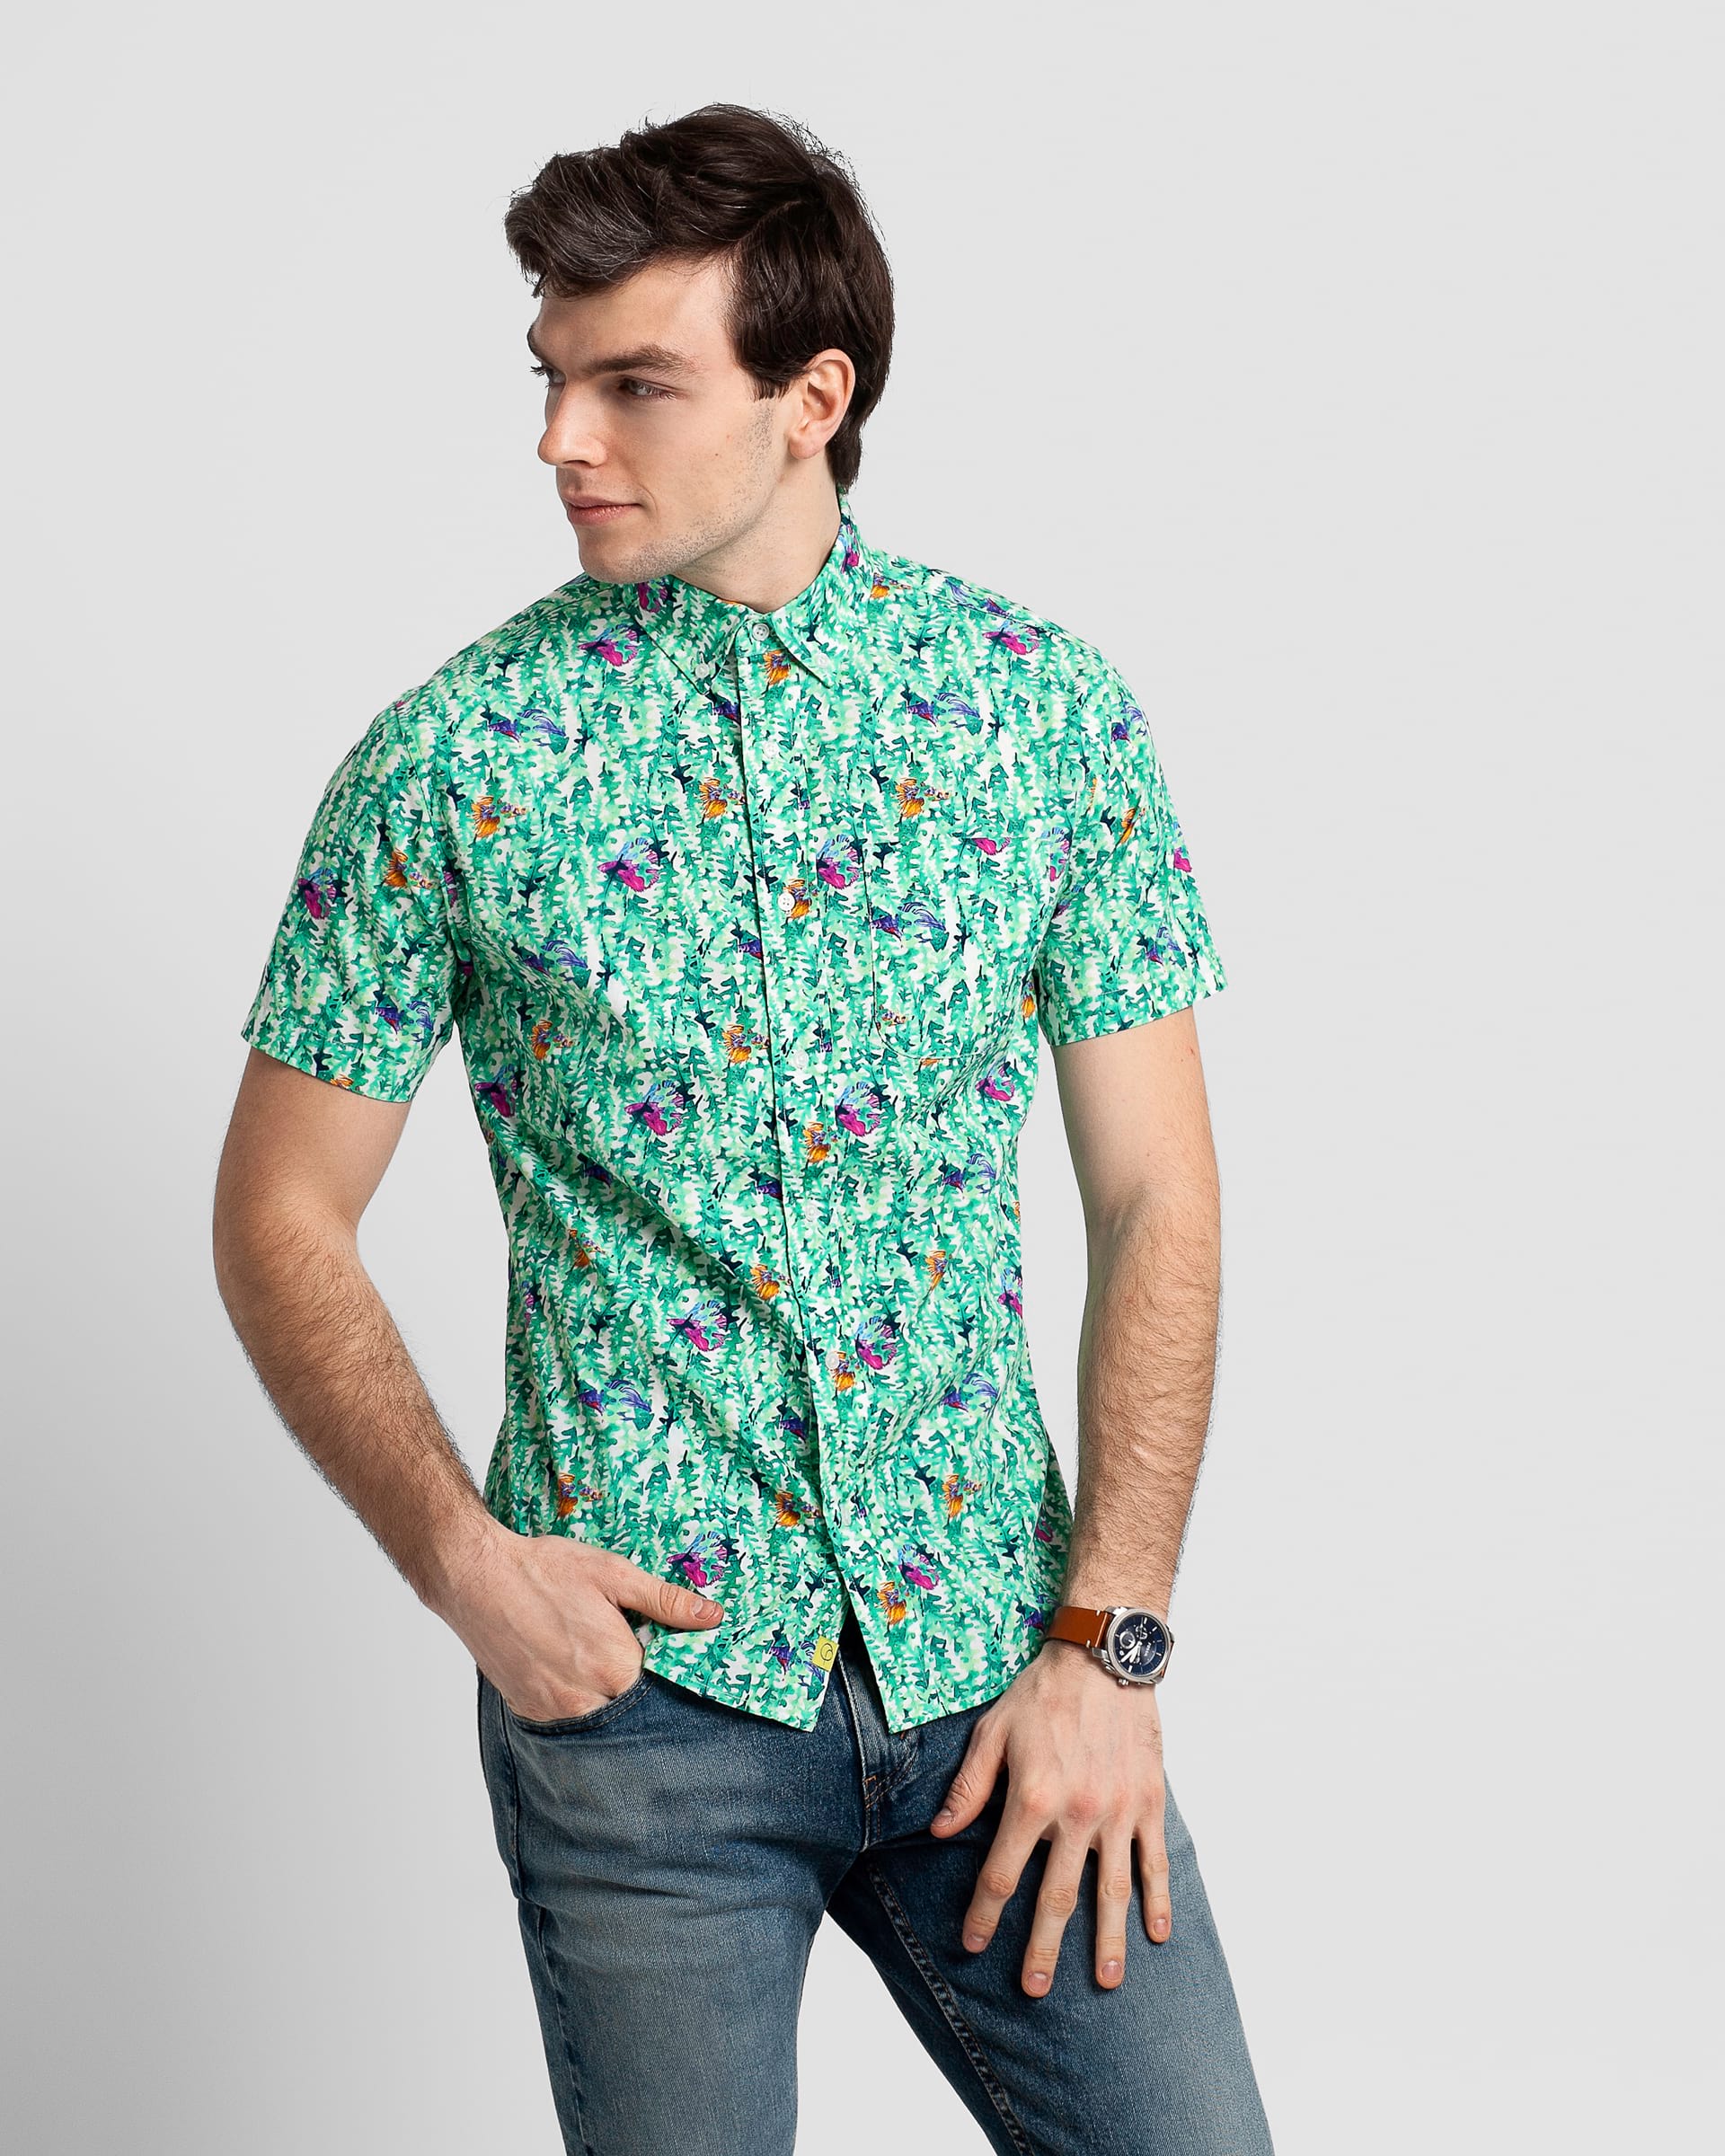 Poplin & Co. Fish Print Shirt > Casual Shirt > Button Up Shirt Small